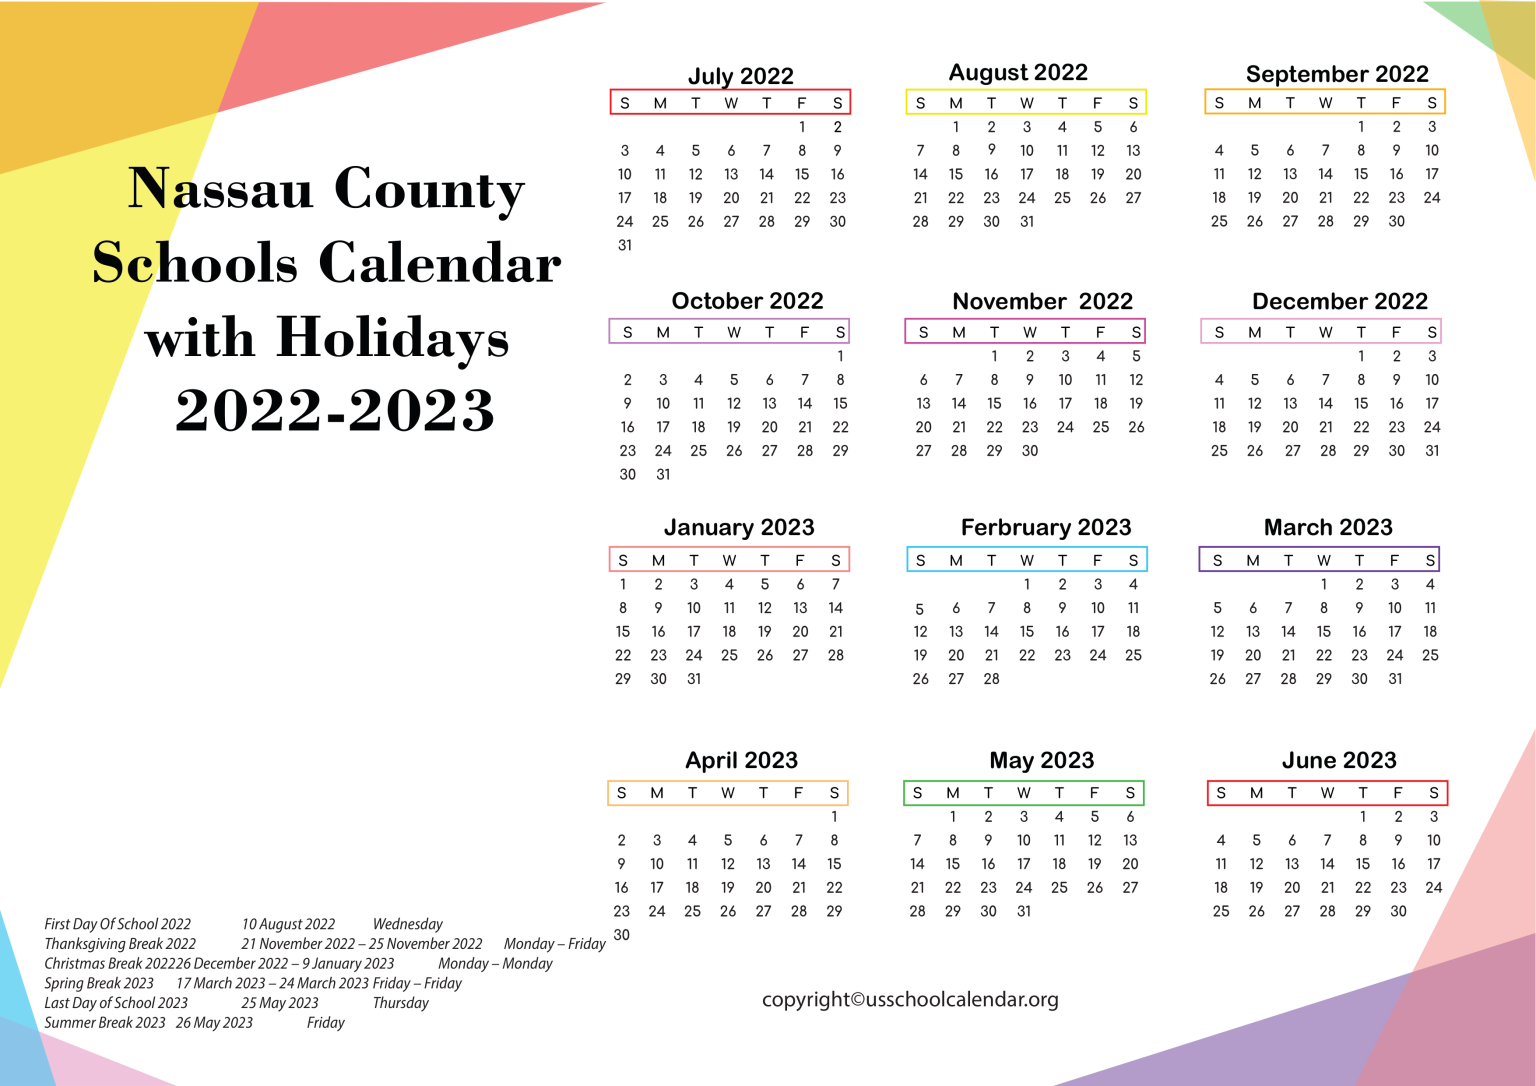 Nassau County Schools Calendar with Holidays 2022-2023